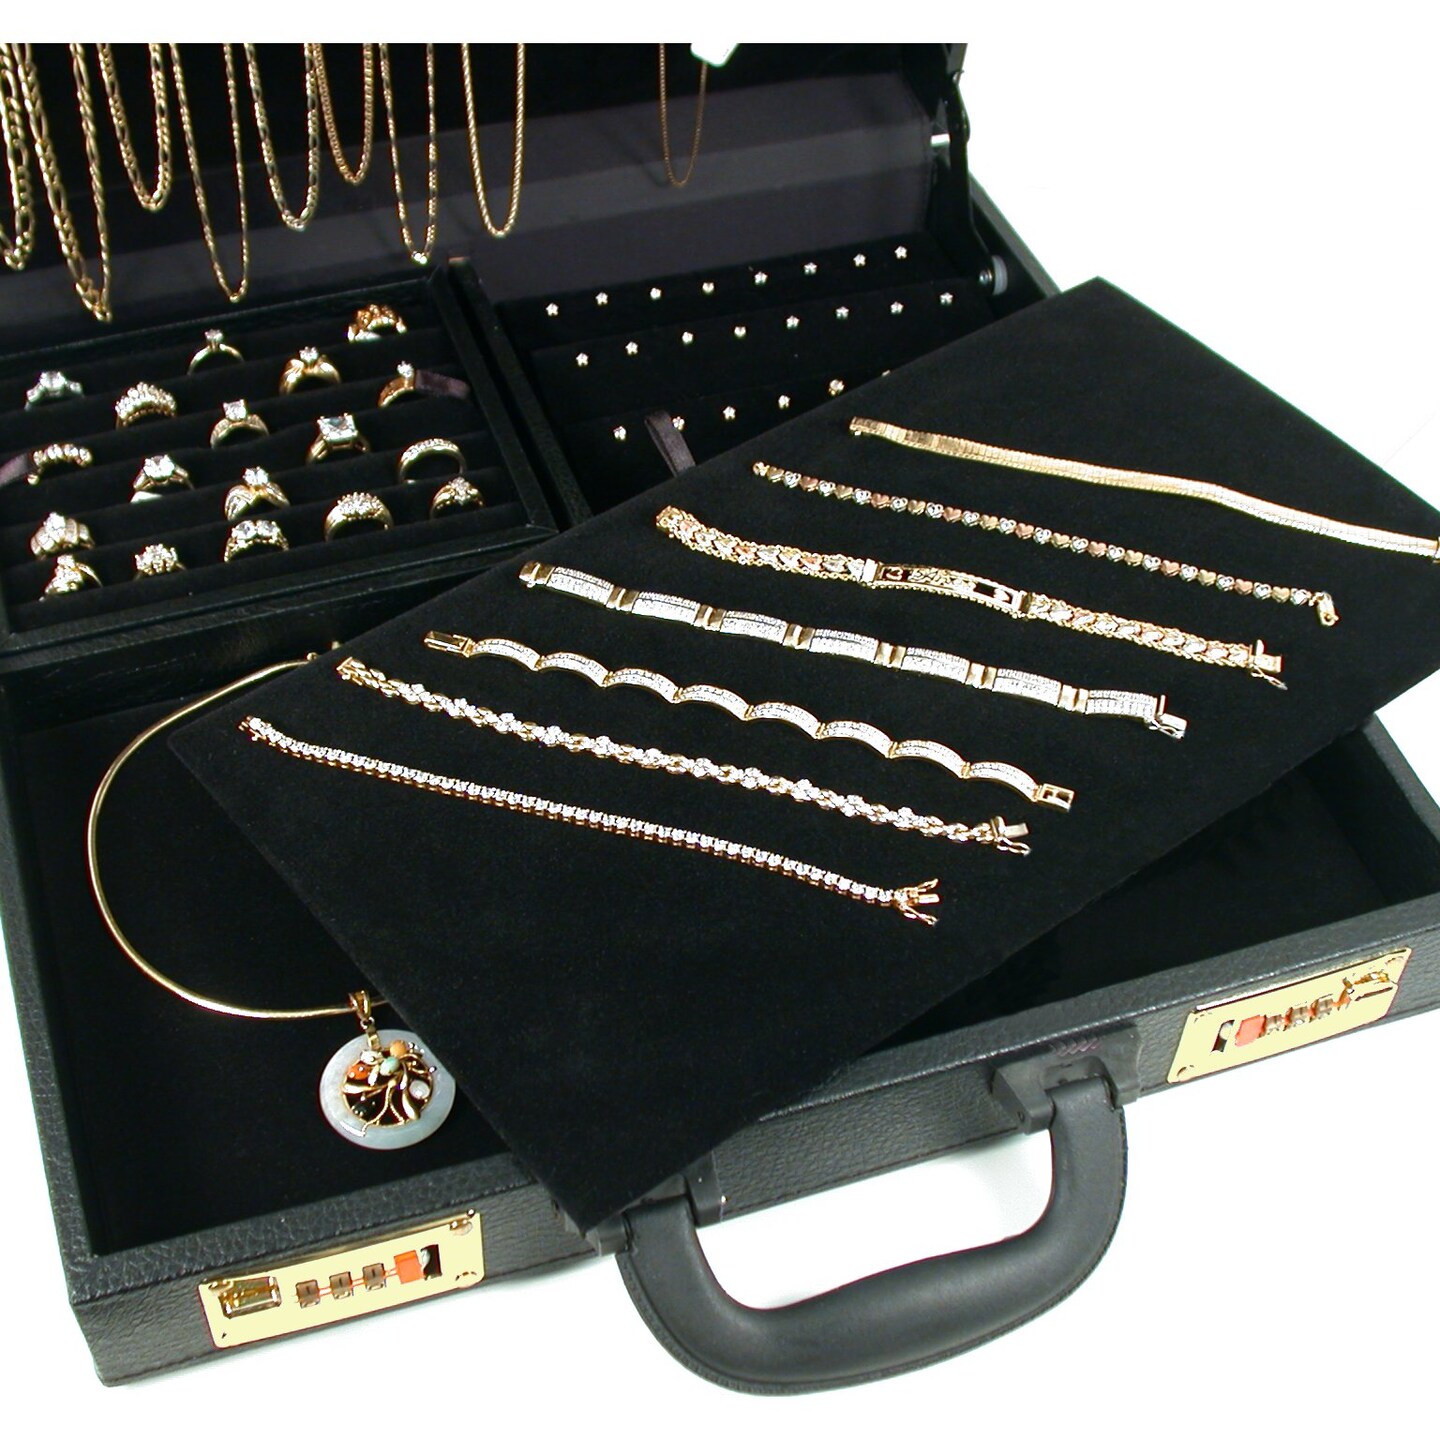 Large Jewelry Travel Attache Presentation Display Case